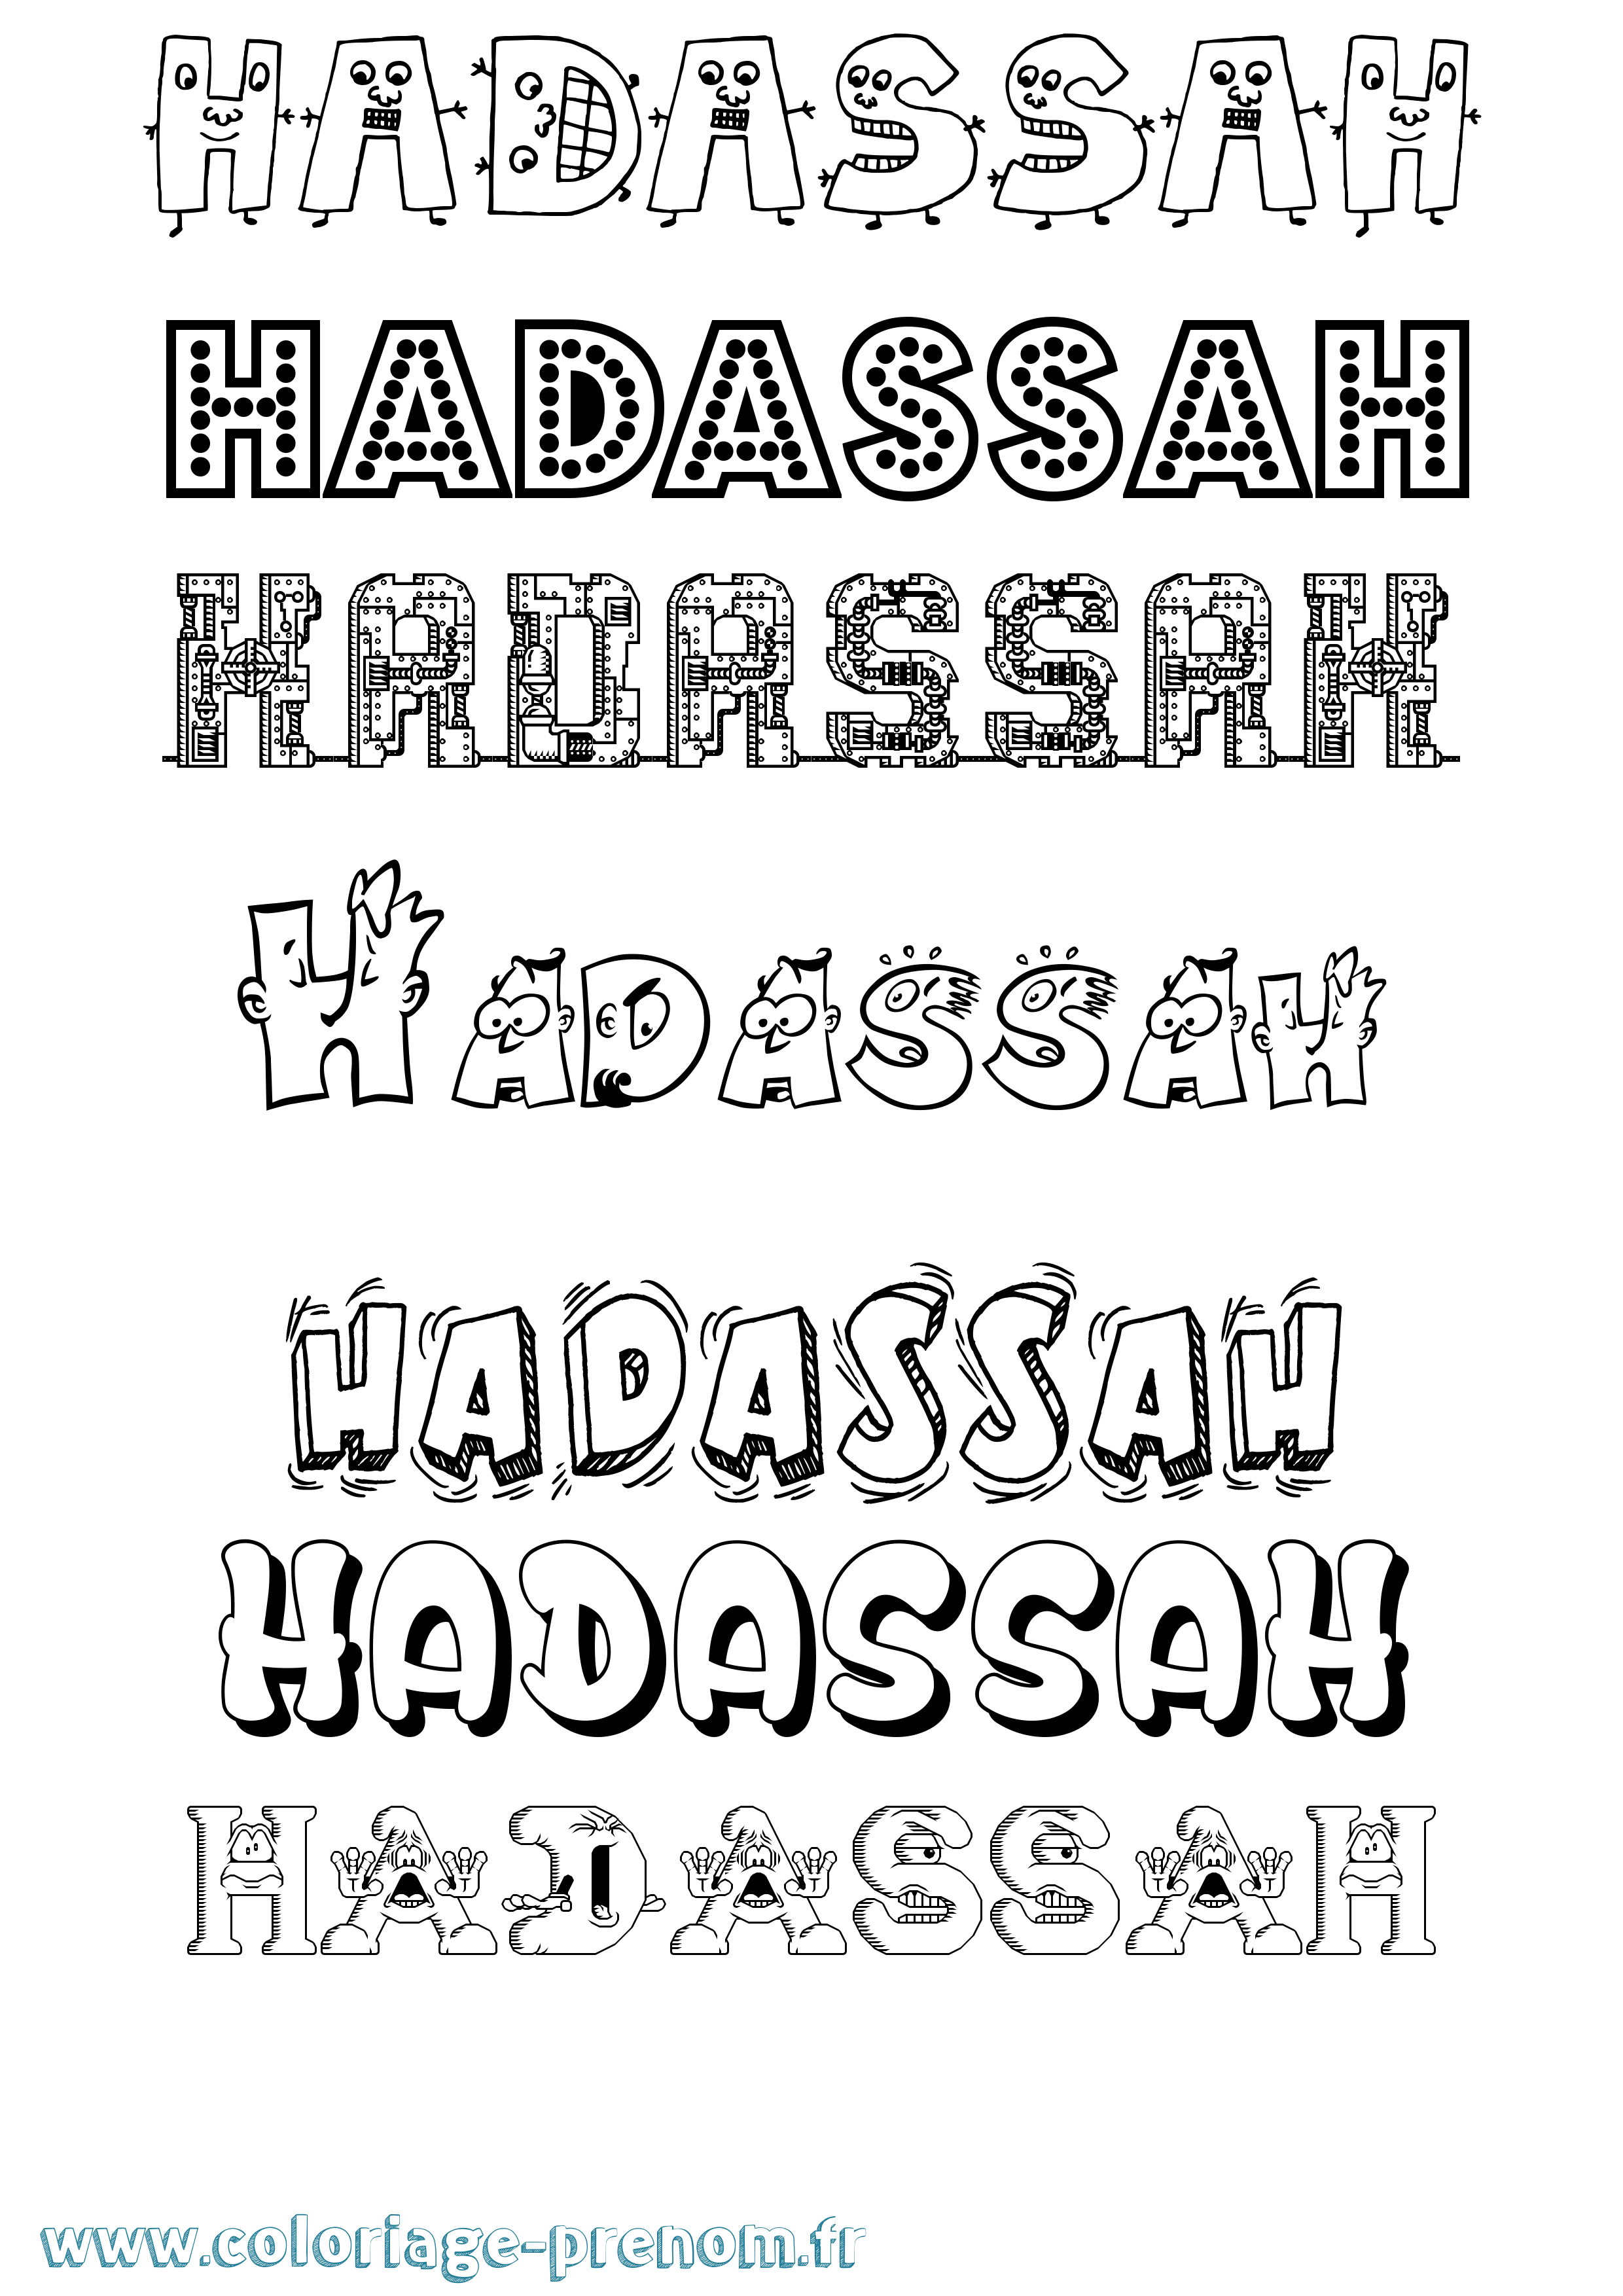 Coloriage prénom Hadassah Fun